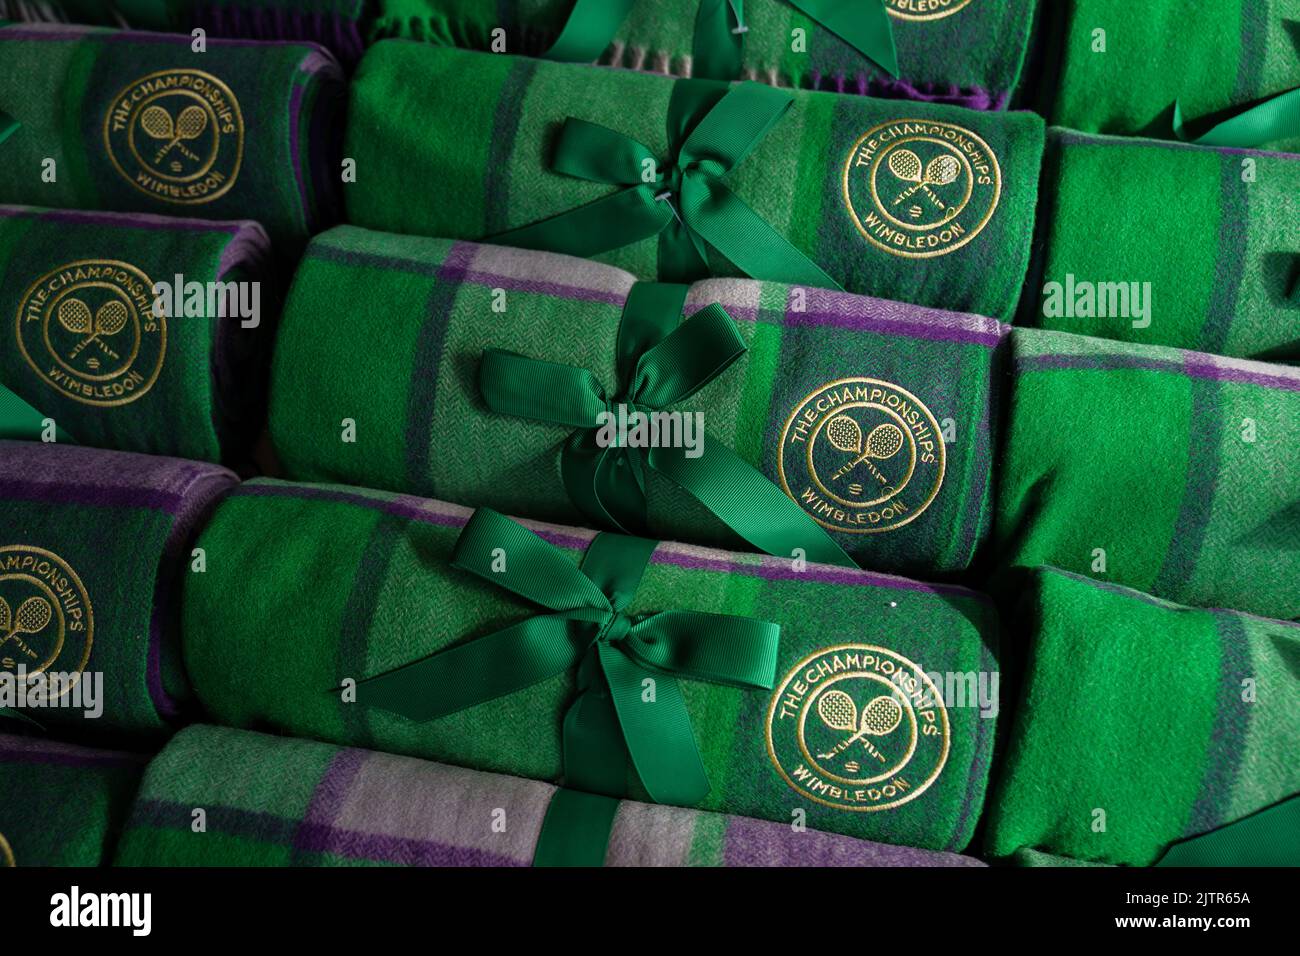 Wimbledon branded blankets Stock Photo